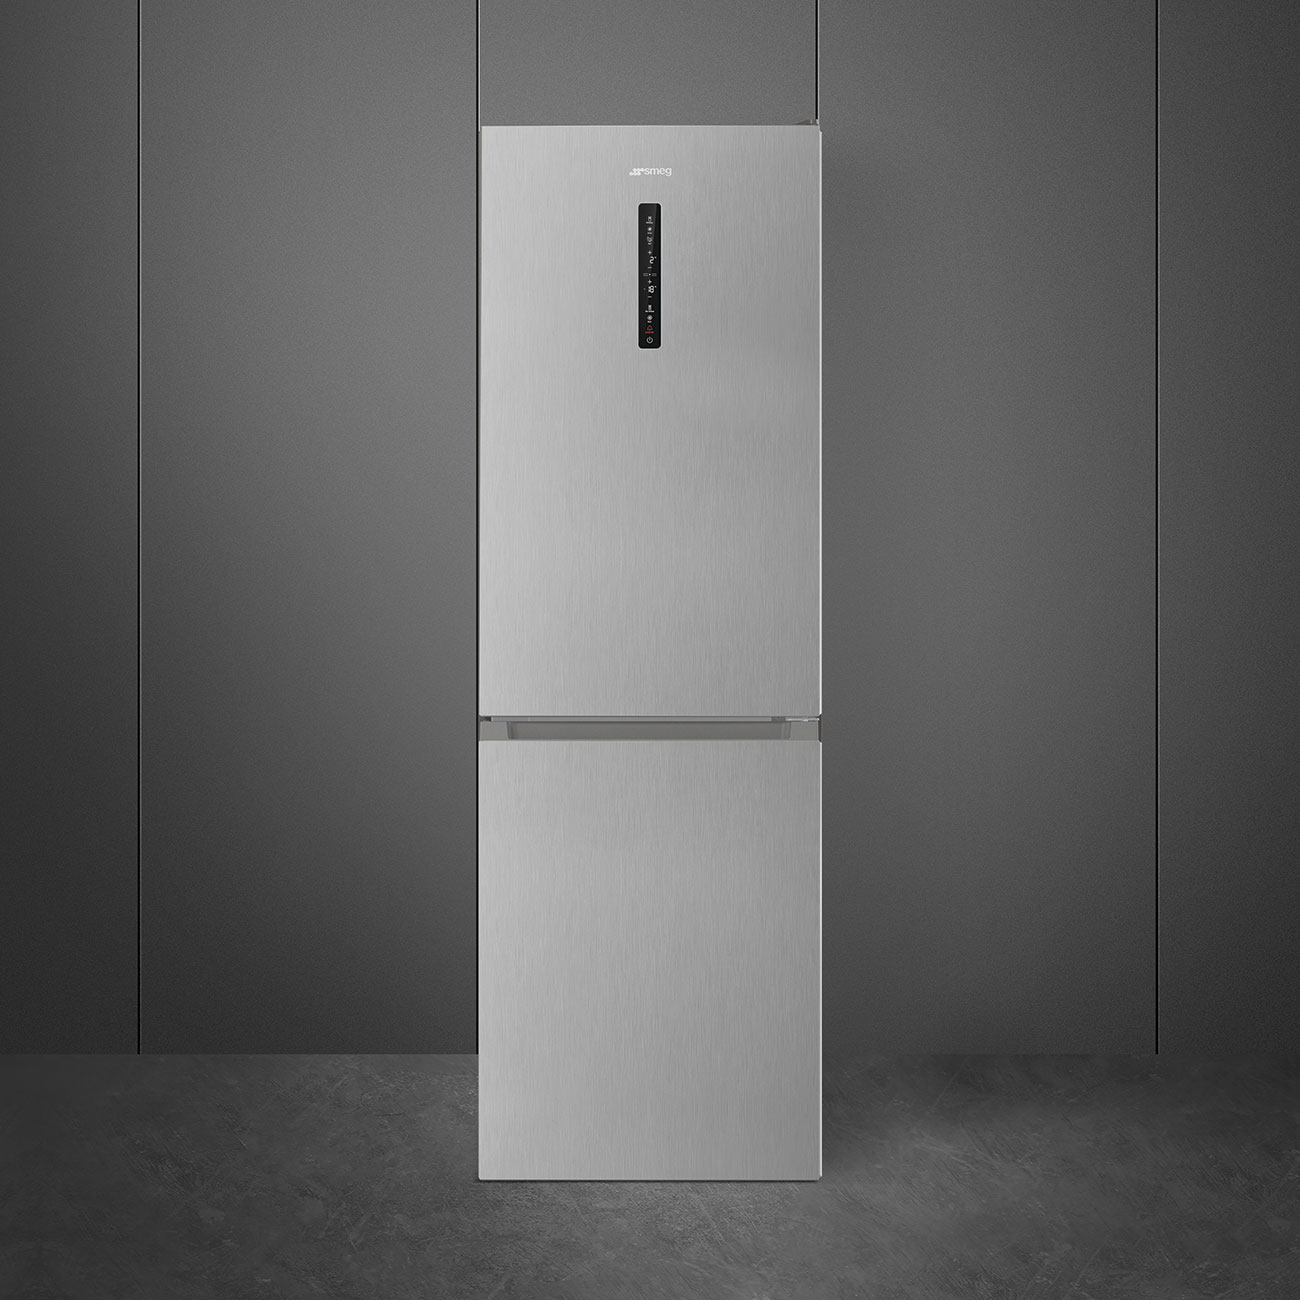 Bottom Mount Free standing refrigerator - Smeg_3